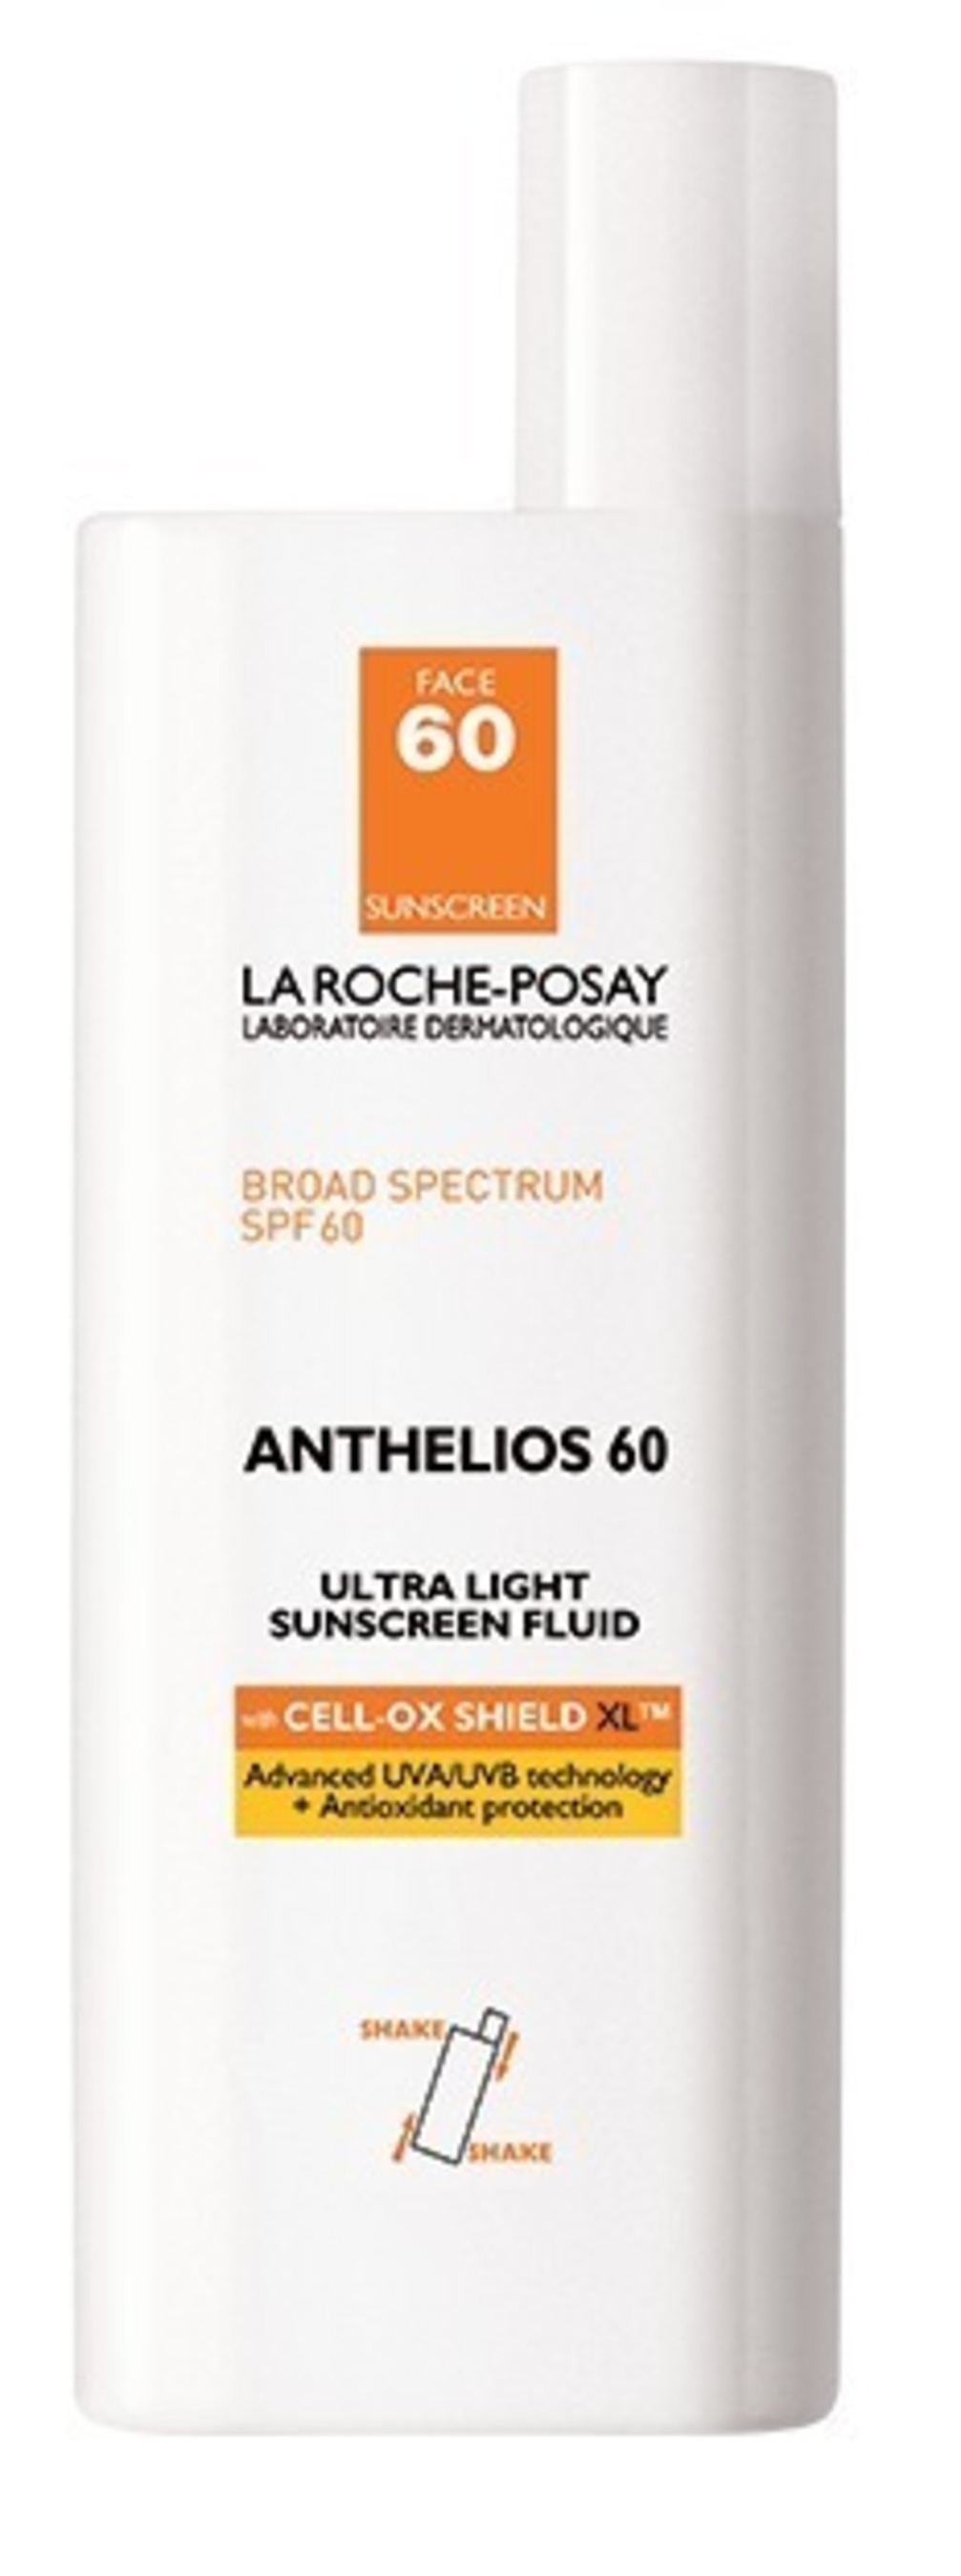 La Roche-Posay Anthelios 60 Ultra Light Sunscreen Fluid Wins 2014 Cosmetic Executive Women (CEW) Beauty Award. (PRNewsFoto/La Roche-Posay)